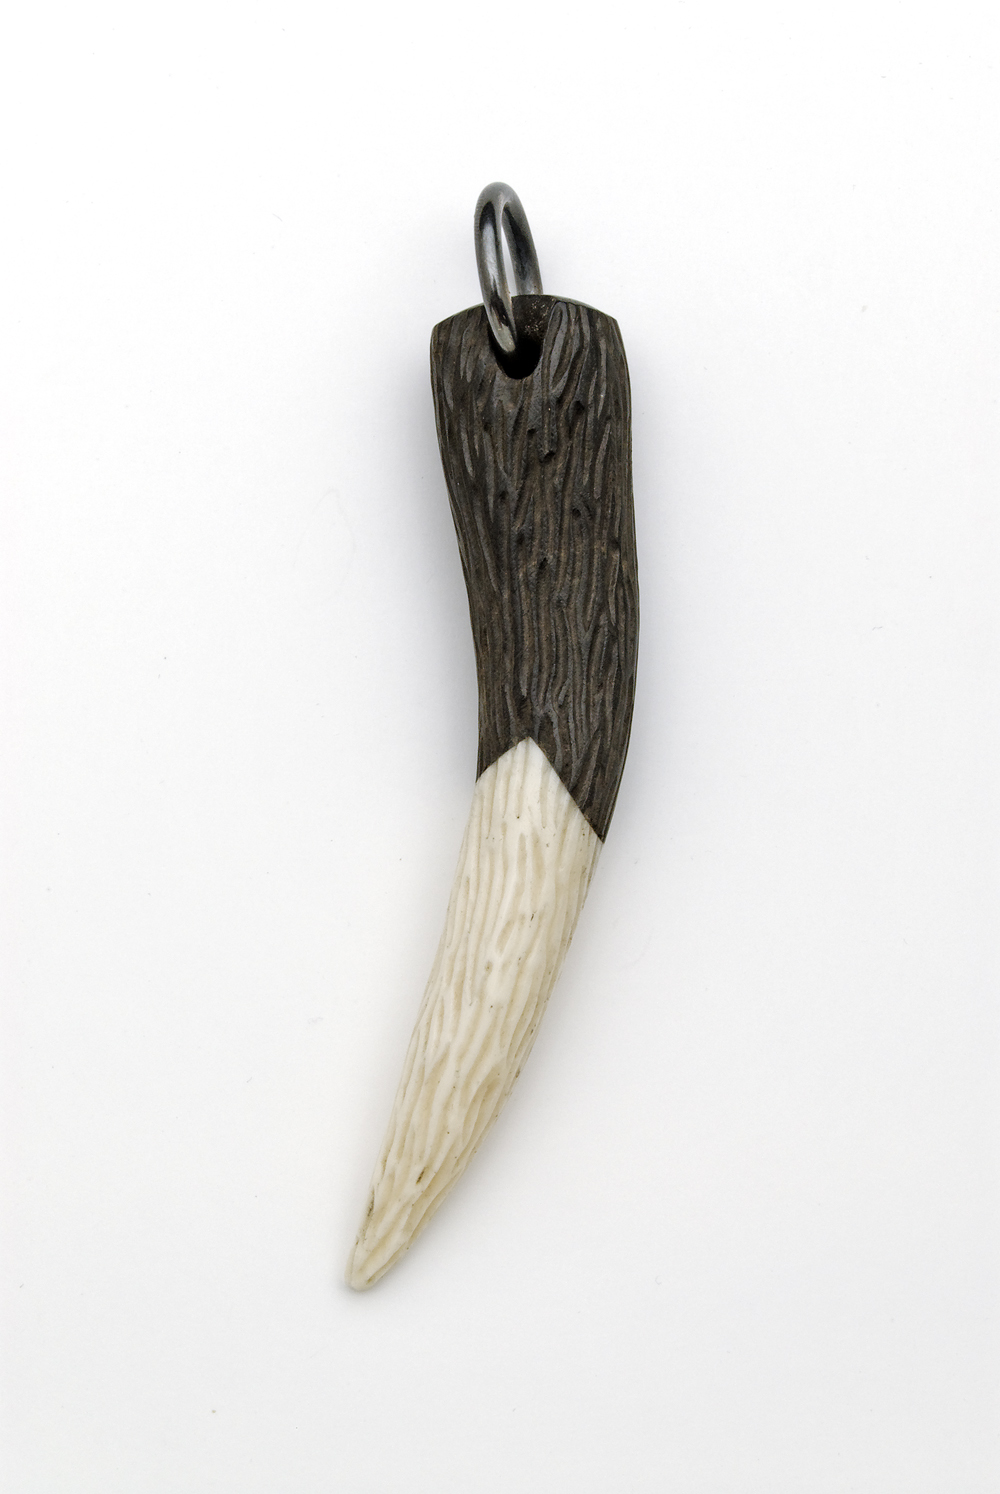 Jane Dodd, 14 Bits, Pendant: Black/White Tooth, 2014, Lignum vitae, dye, sterling silver, 8.8 x 5.8 x 2.2 cm